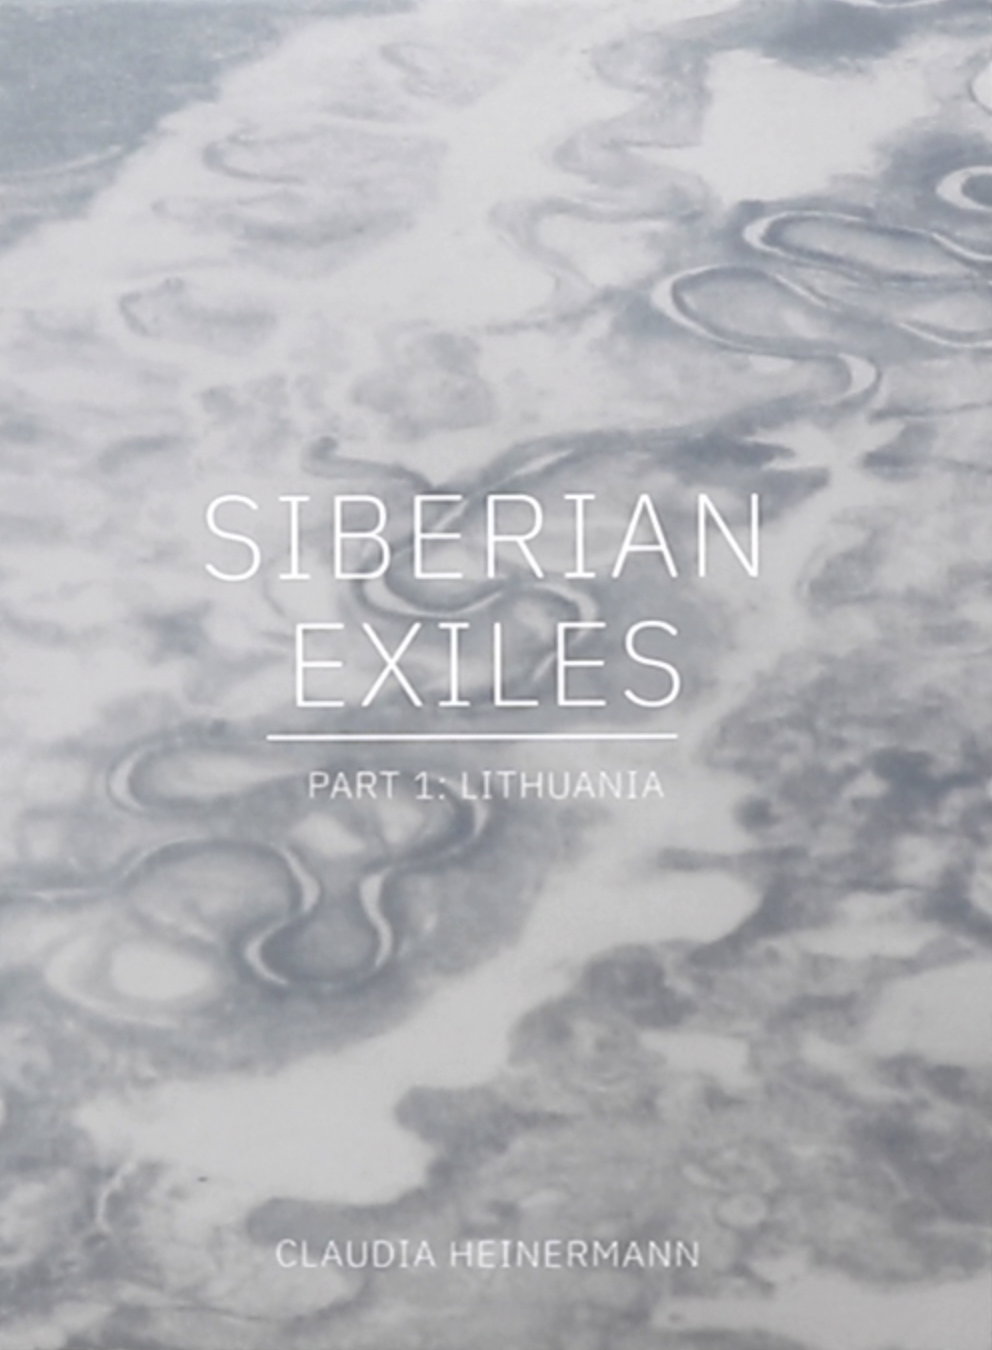 Siberian Exiles: Part 1 Claudia Heinermann